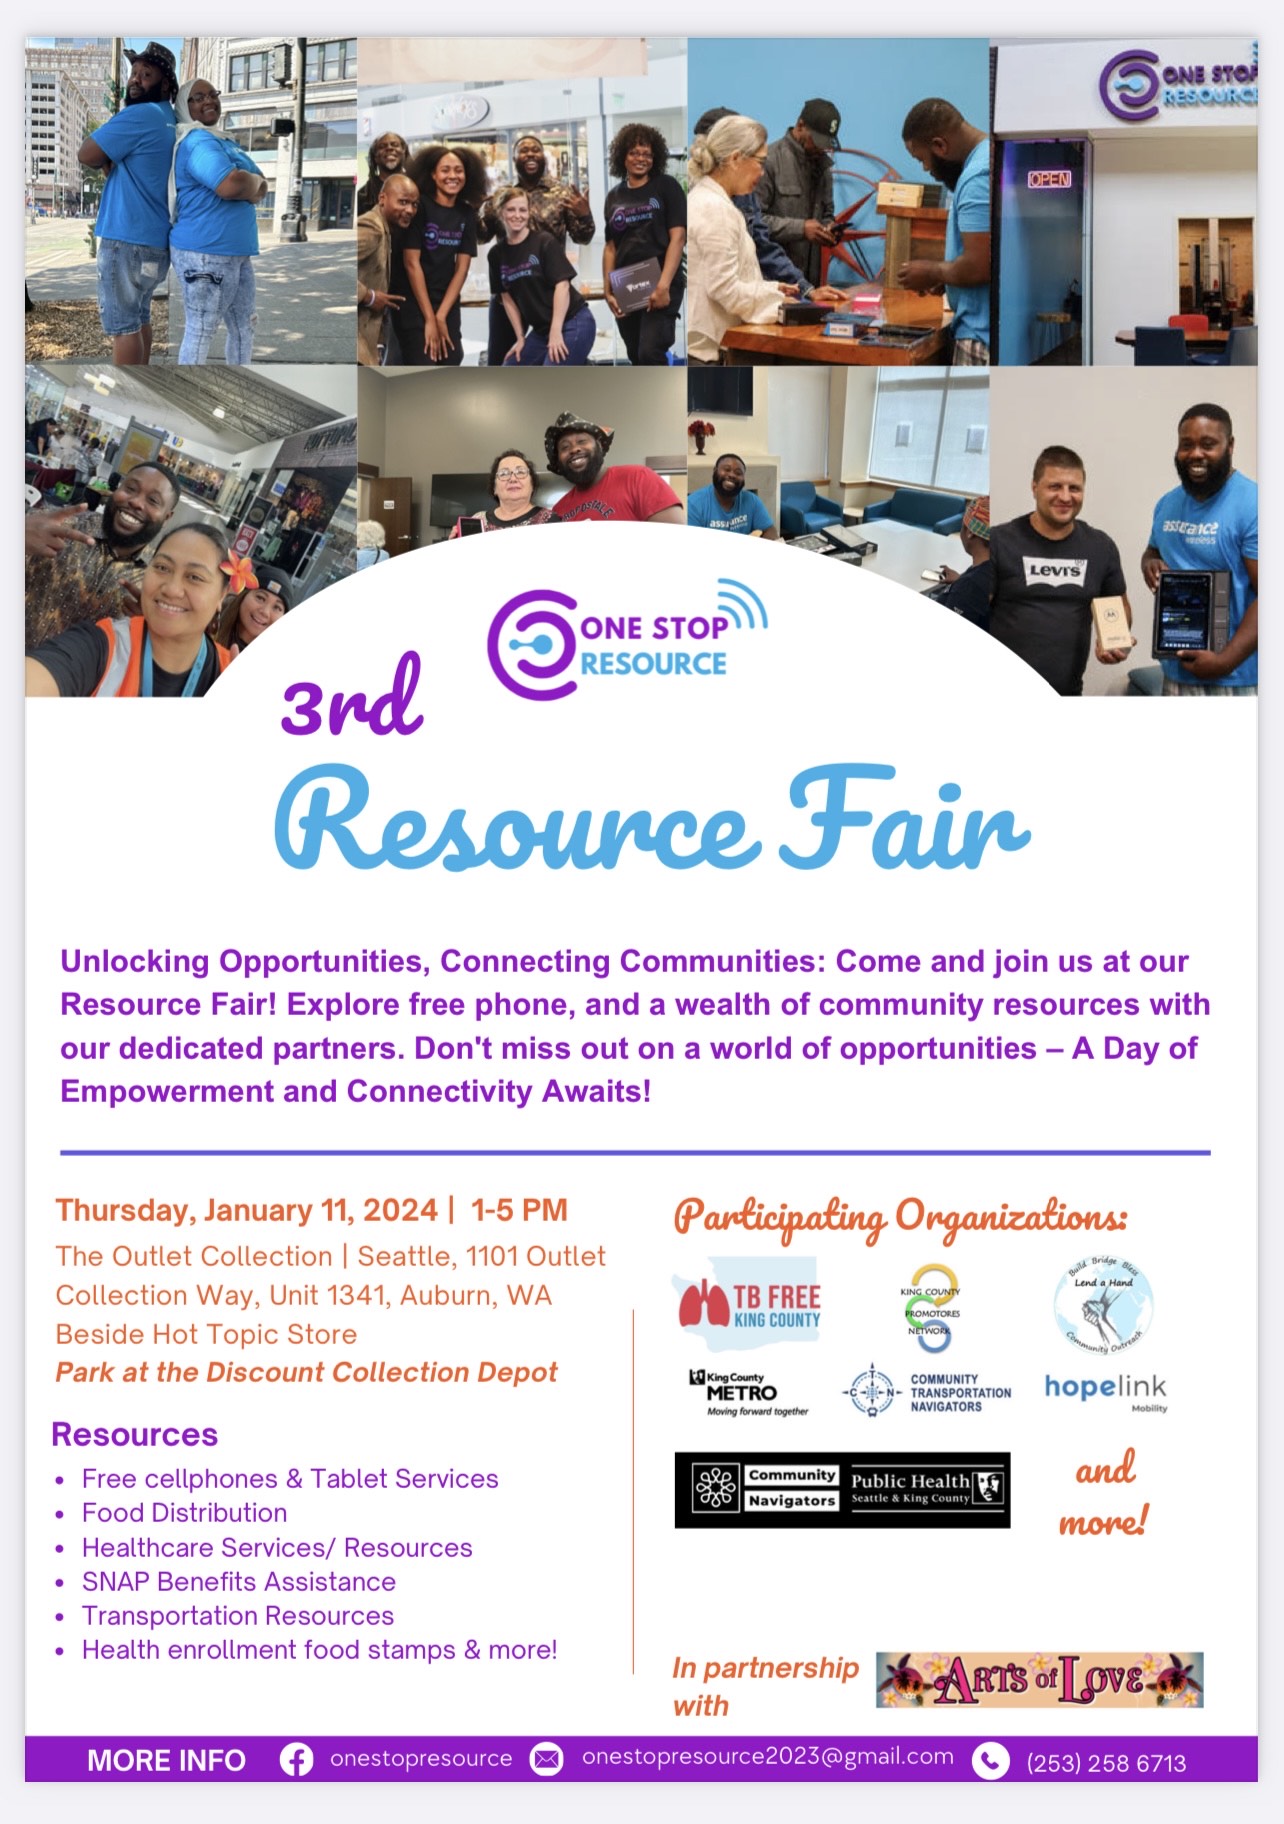 One Stop Resource Fair Jan 11, 2024 Auburn